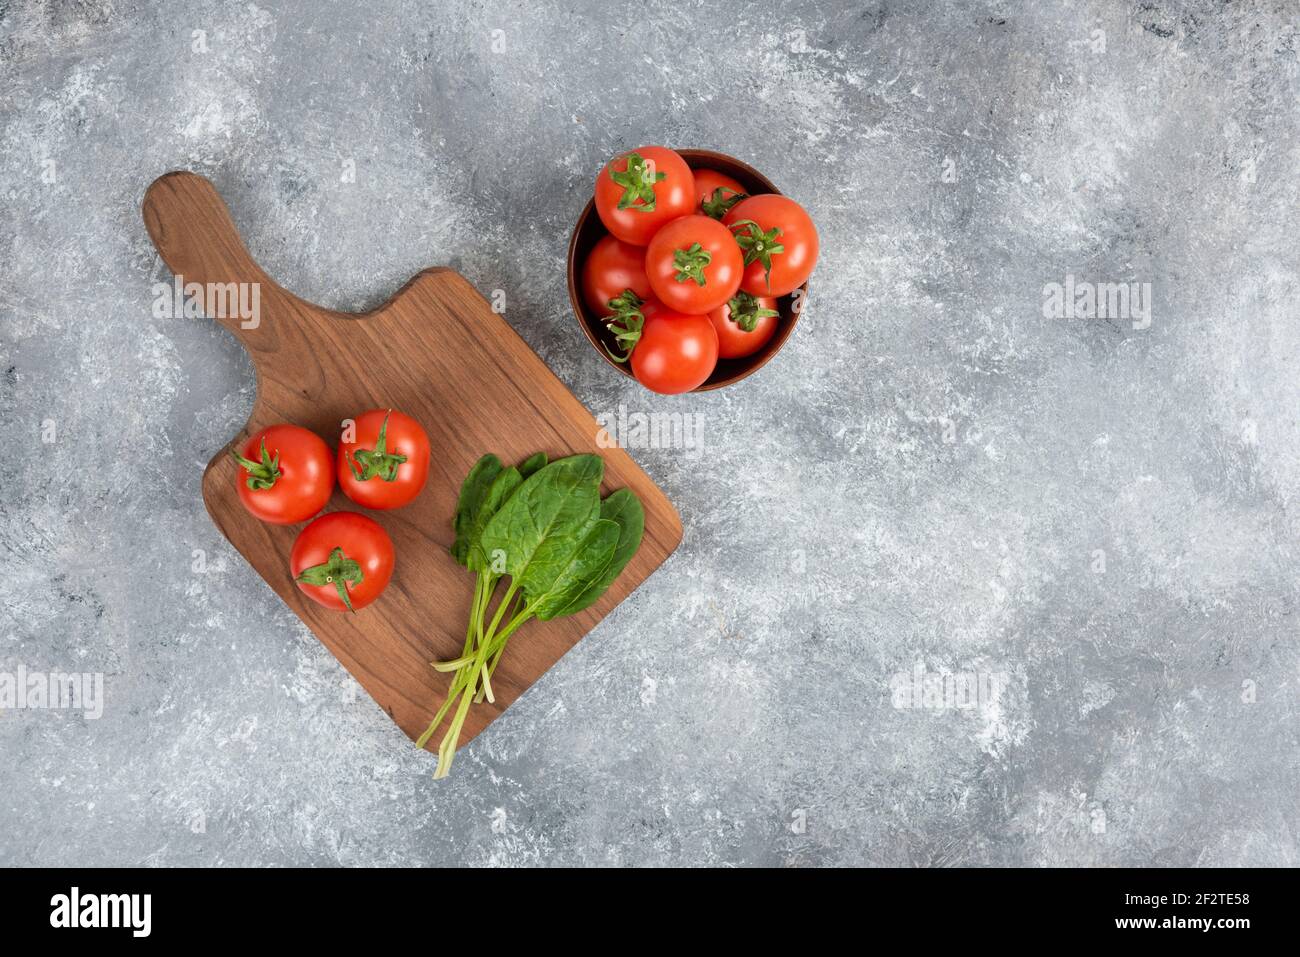 Holzschüssel mit roten Tomaten mit Grüntönen auf Marmorboden Stockfoto